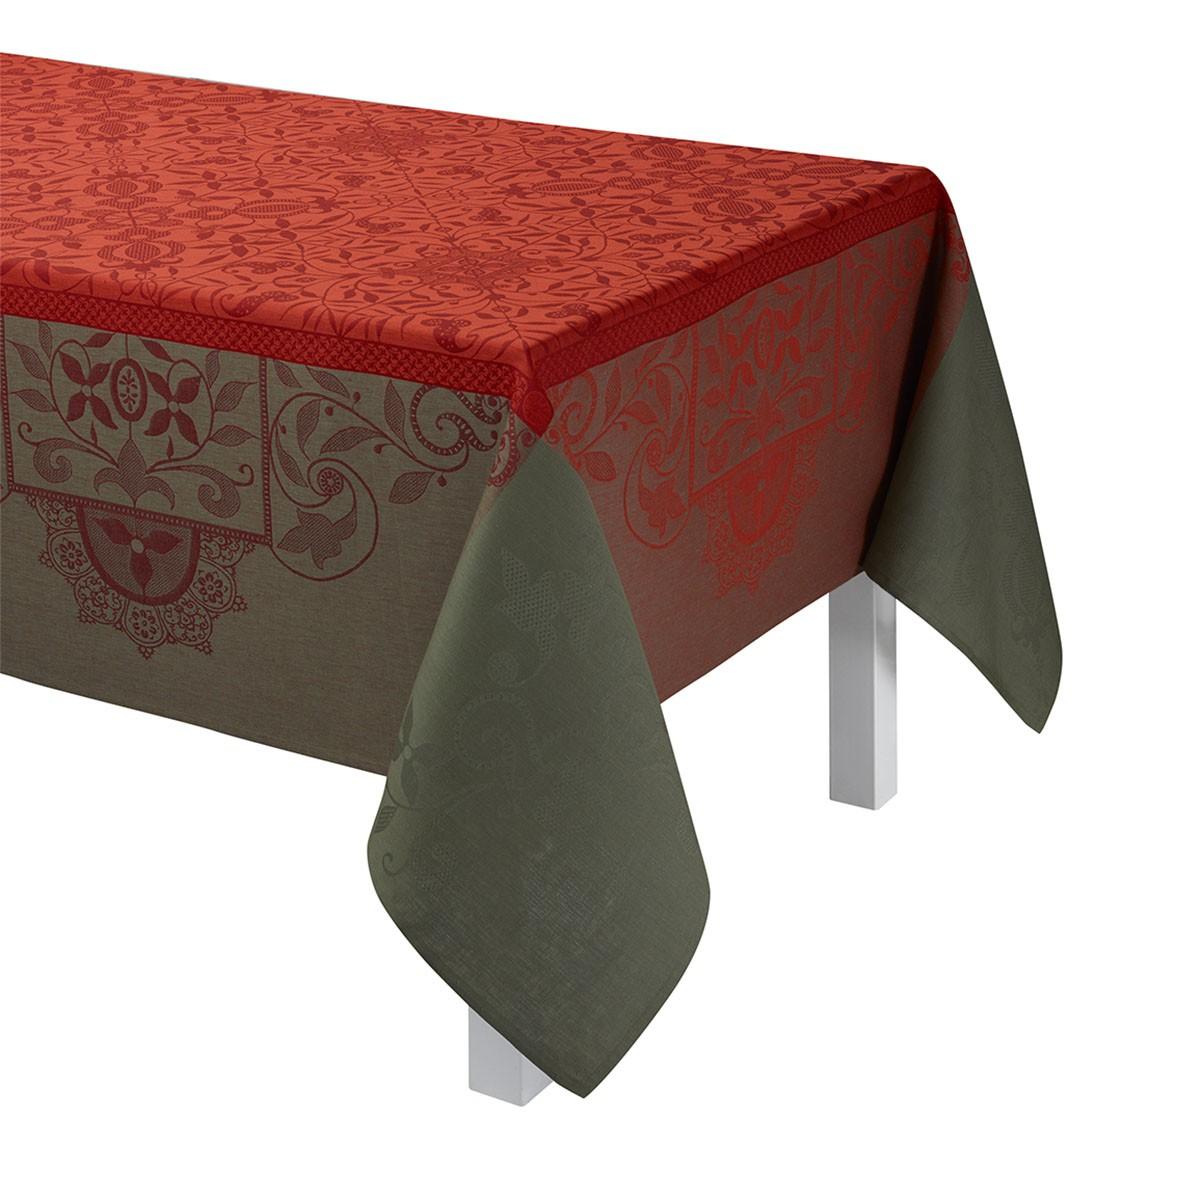 Venezia Cornelian Tablecloth - 69x98"